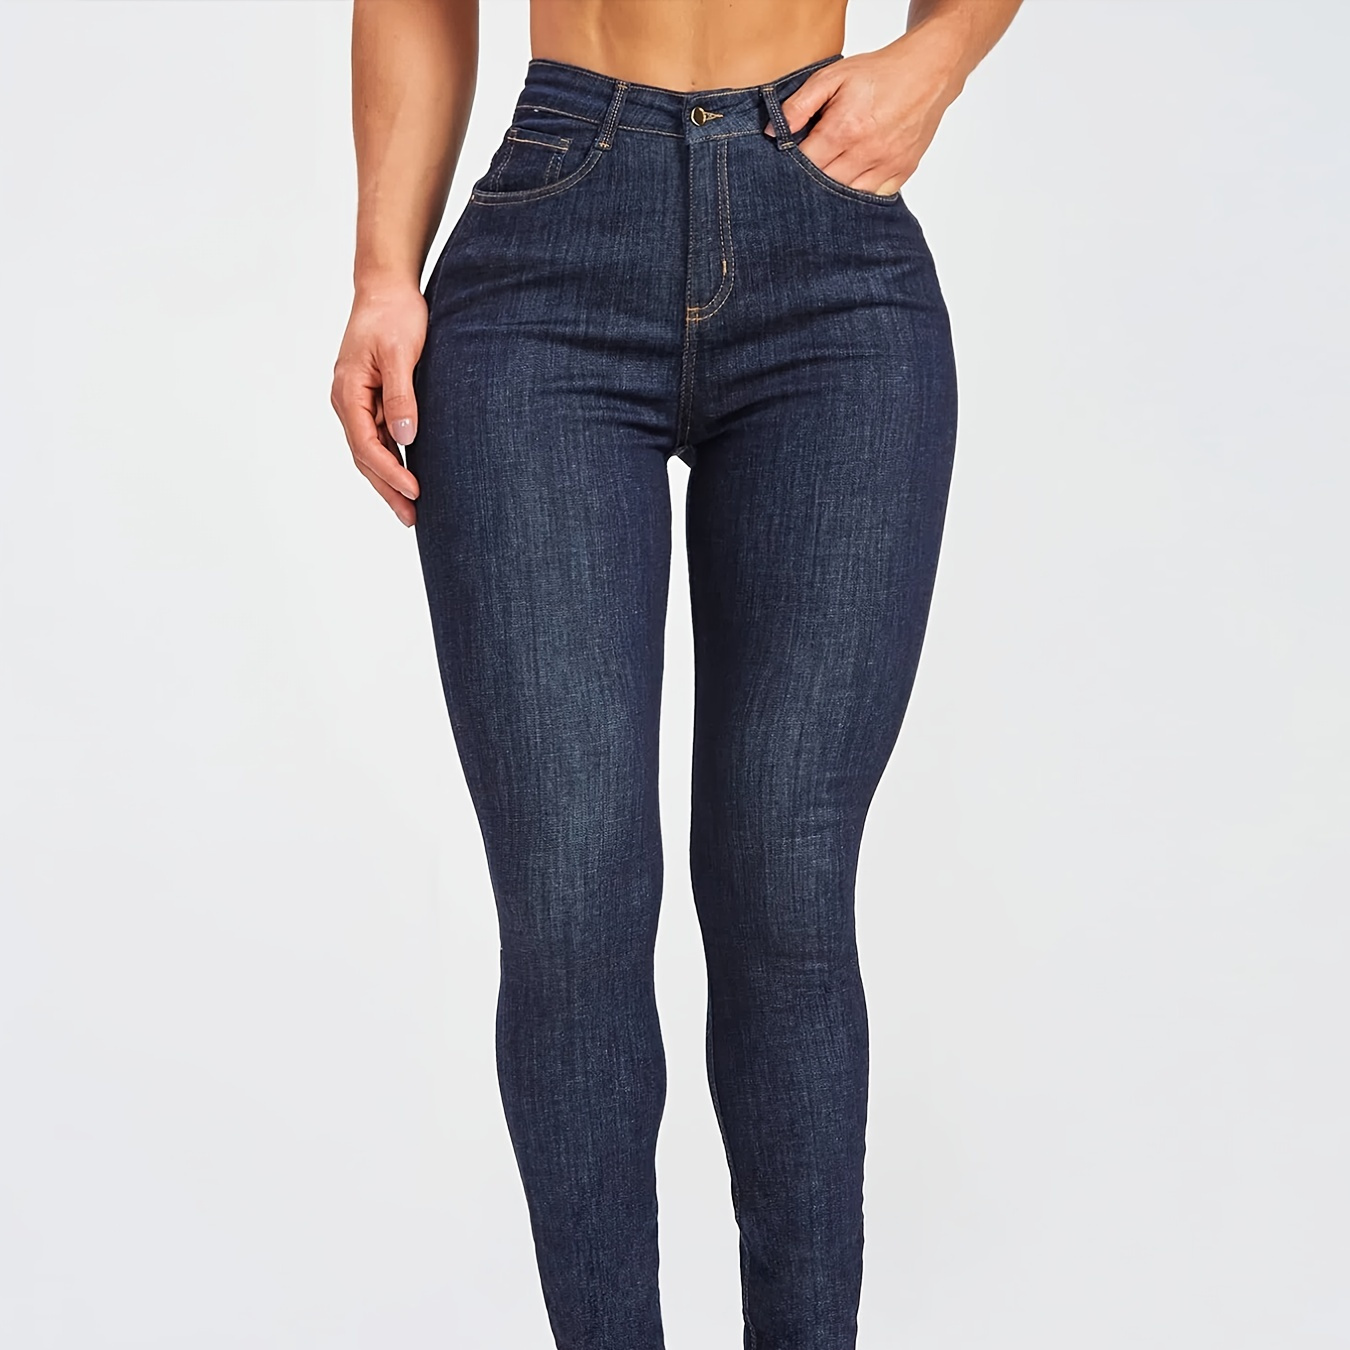 

High Rise Stretchy Skinny Jeans, High Waist Tight Fit Zipper Dark Blue Pencil Denim Jeans, Women's Denim Jeans & Clothing